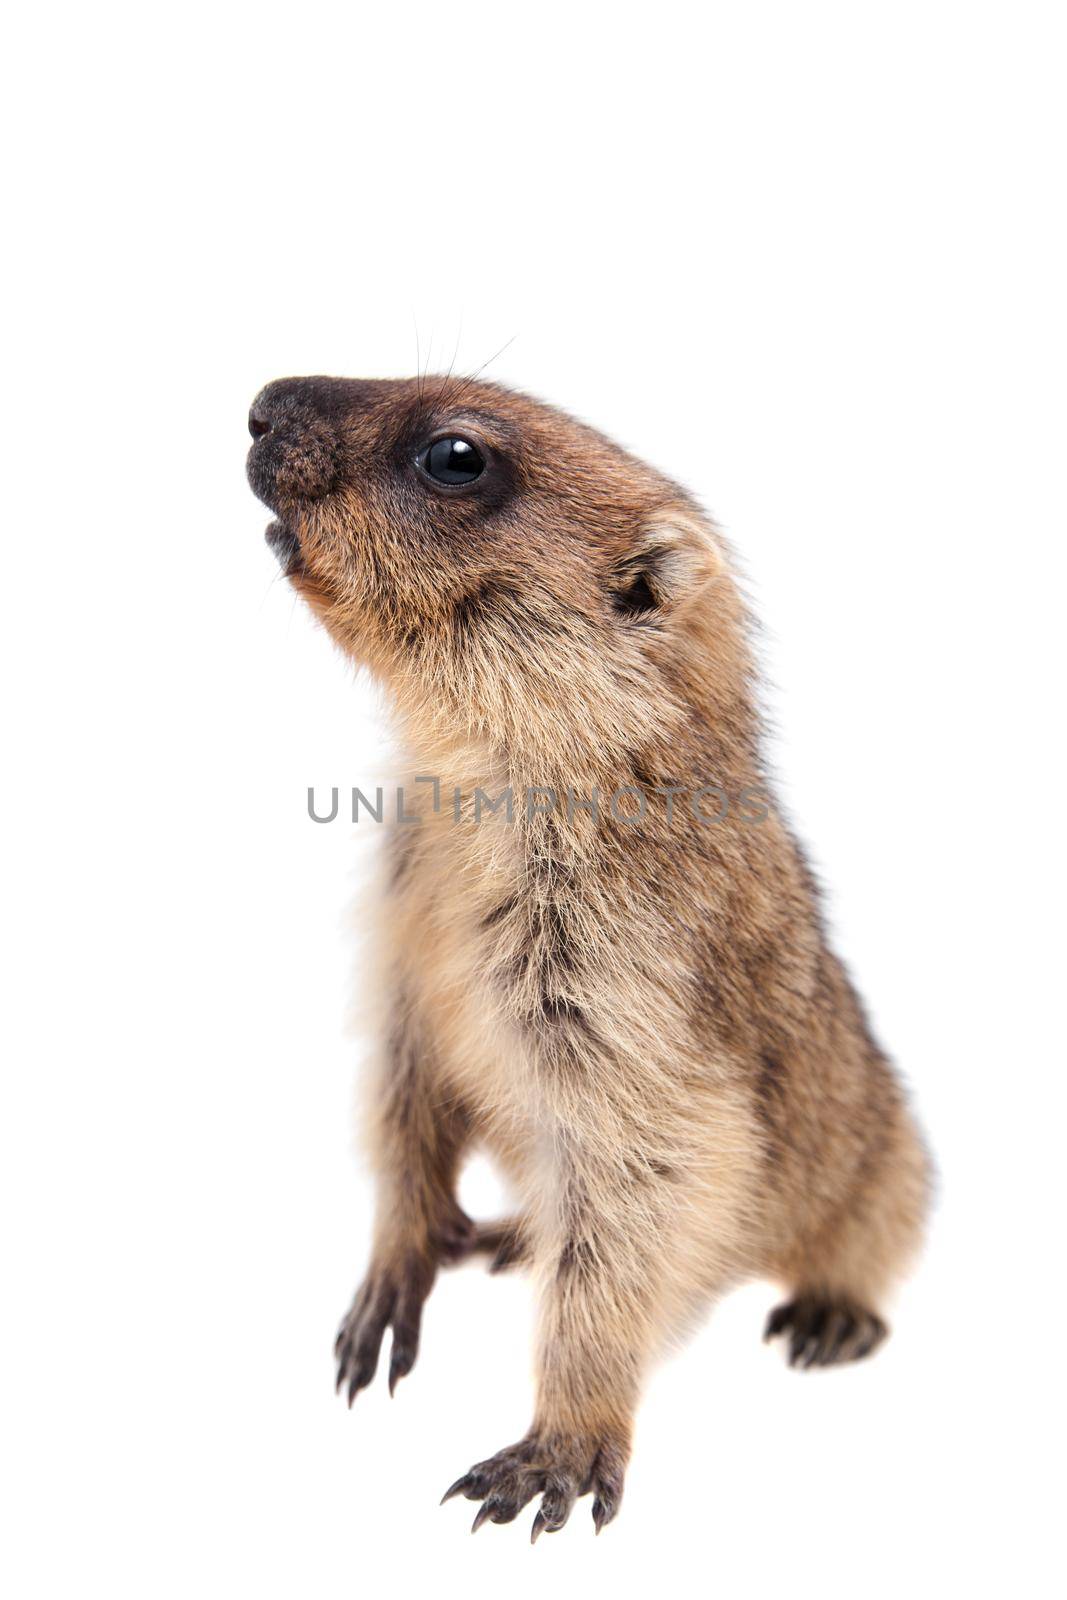 The bobak marmot cub isolated on white, Marmota bobak, or steppe marmot